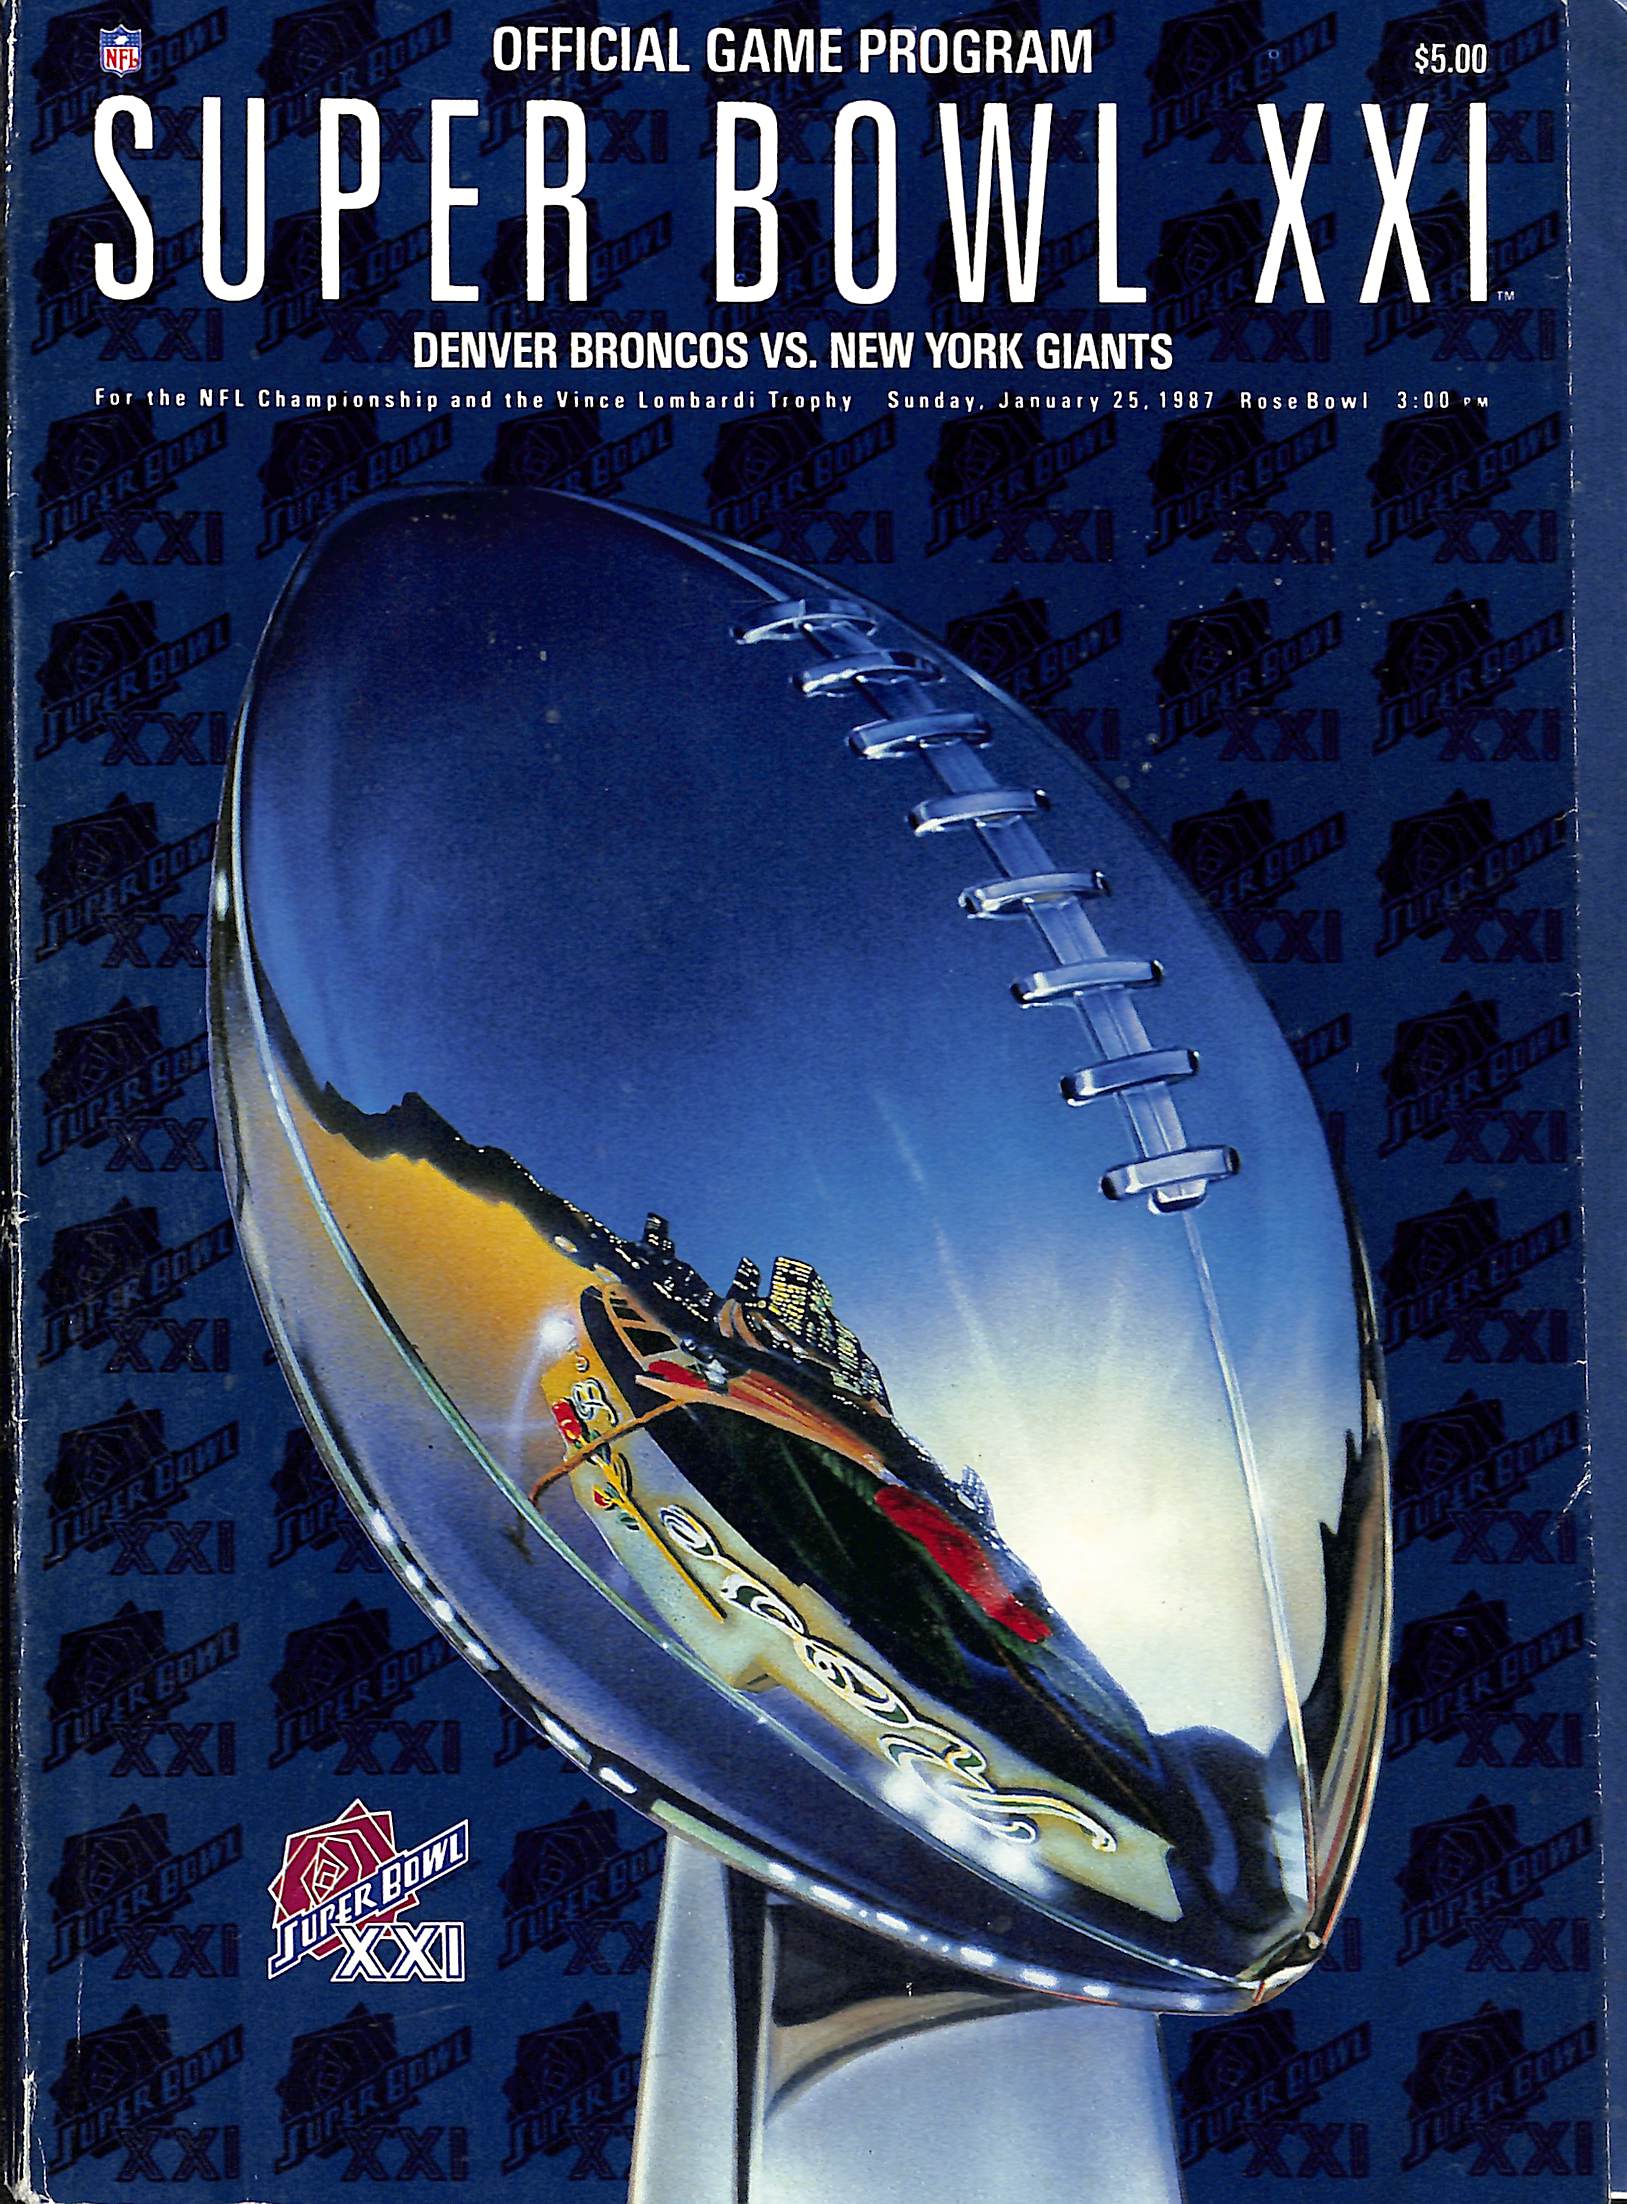 FIINR Other Sports Memorabilia 1987 Super Bowl 21 Real Game Program - Vintage Super Bowl XXI Rose Bowl Stadium Denver Broncos Vs New York Giants -